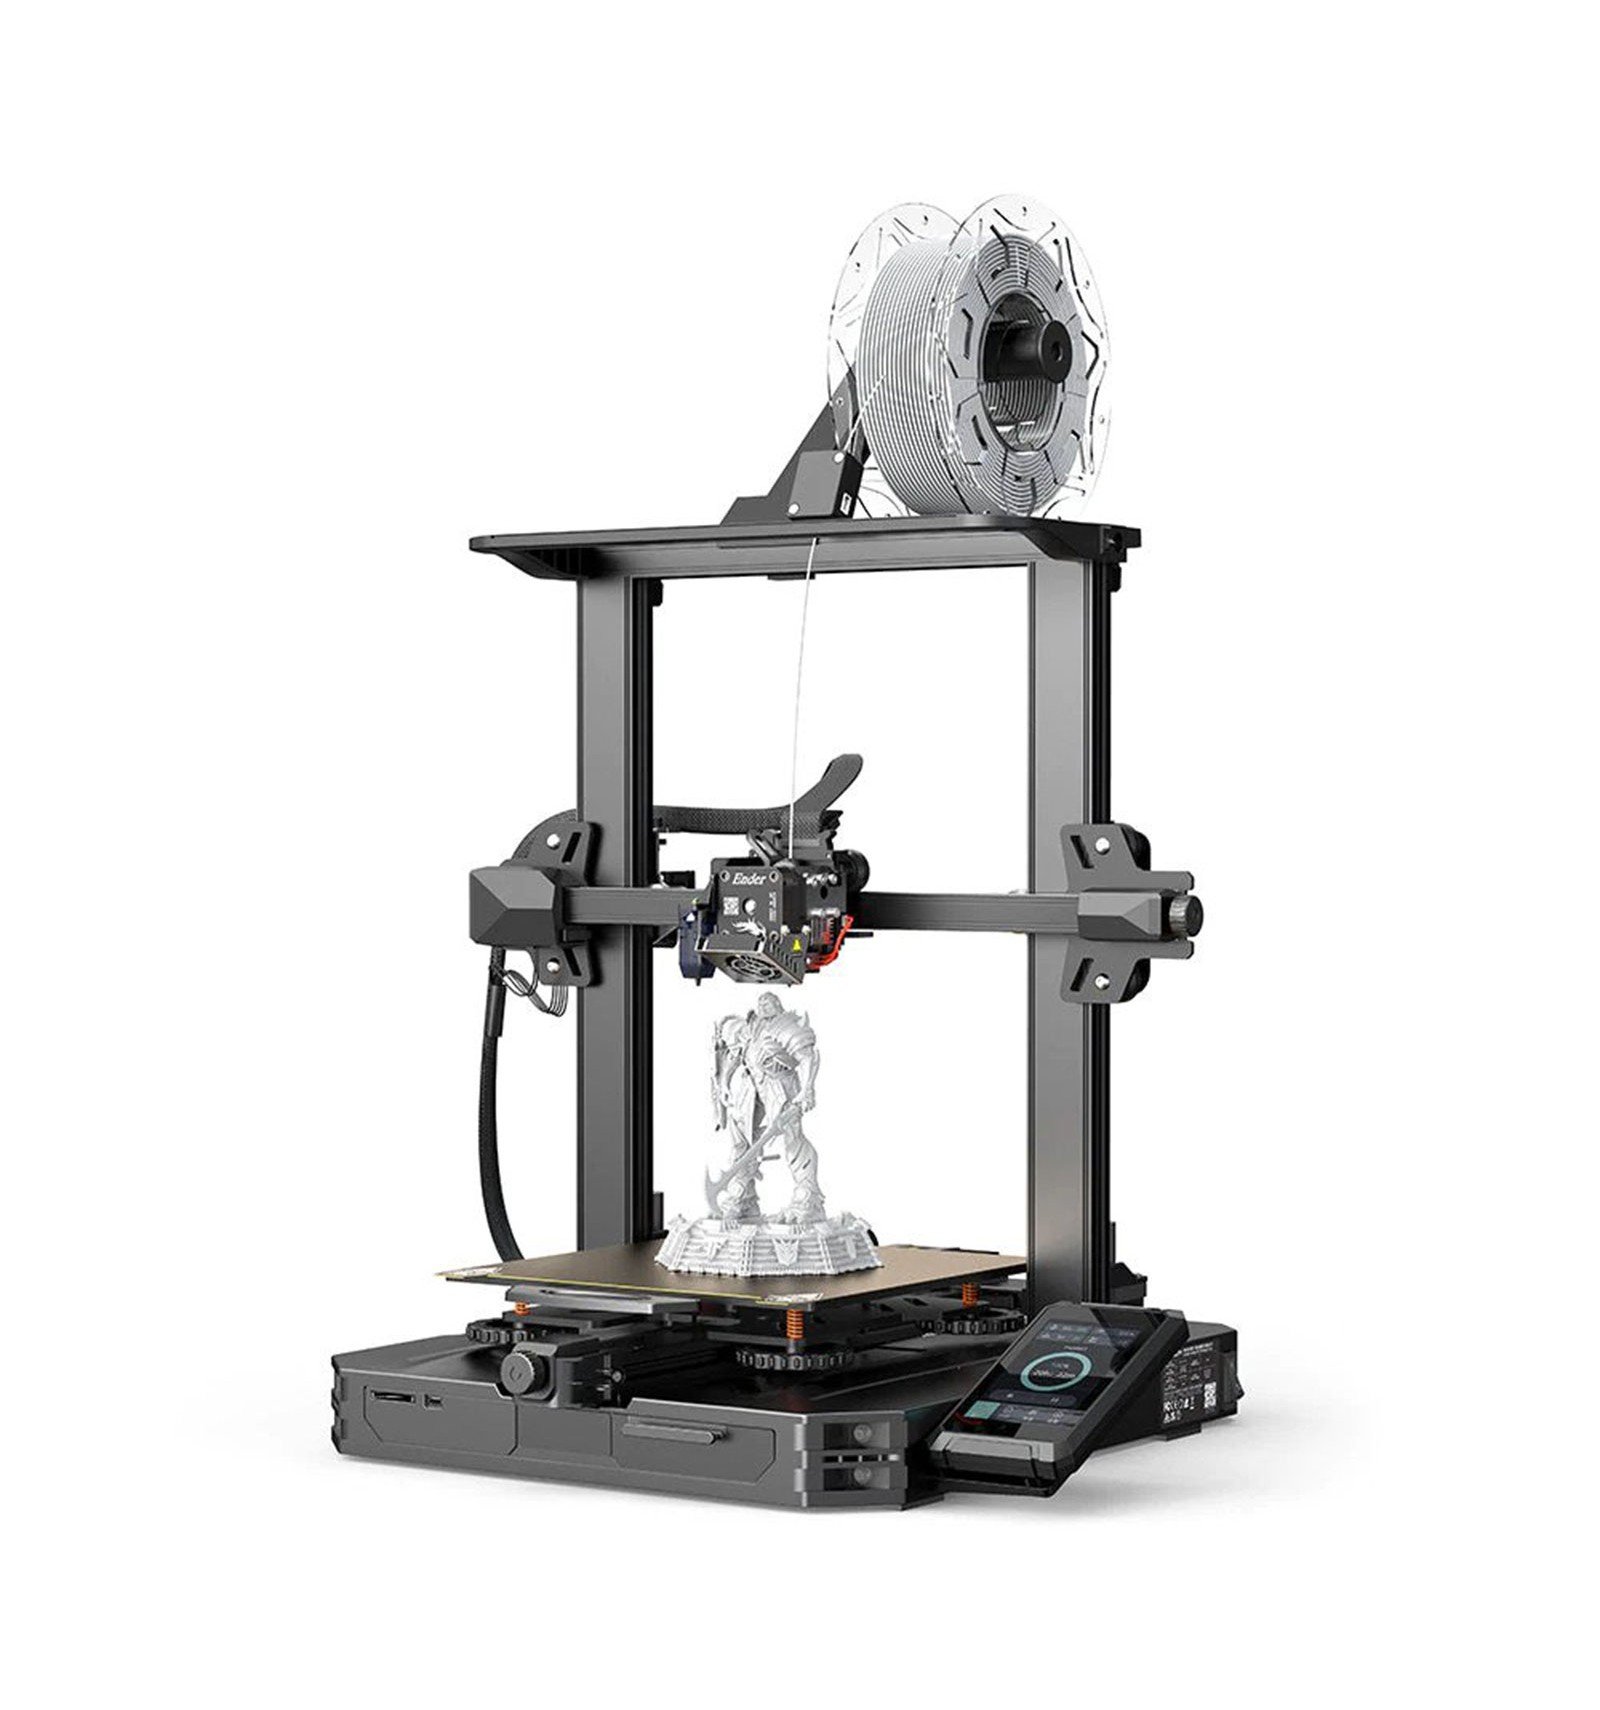 Creality Ender 3 S1 Pro 3D Printer – DIY Electronics